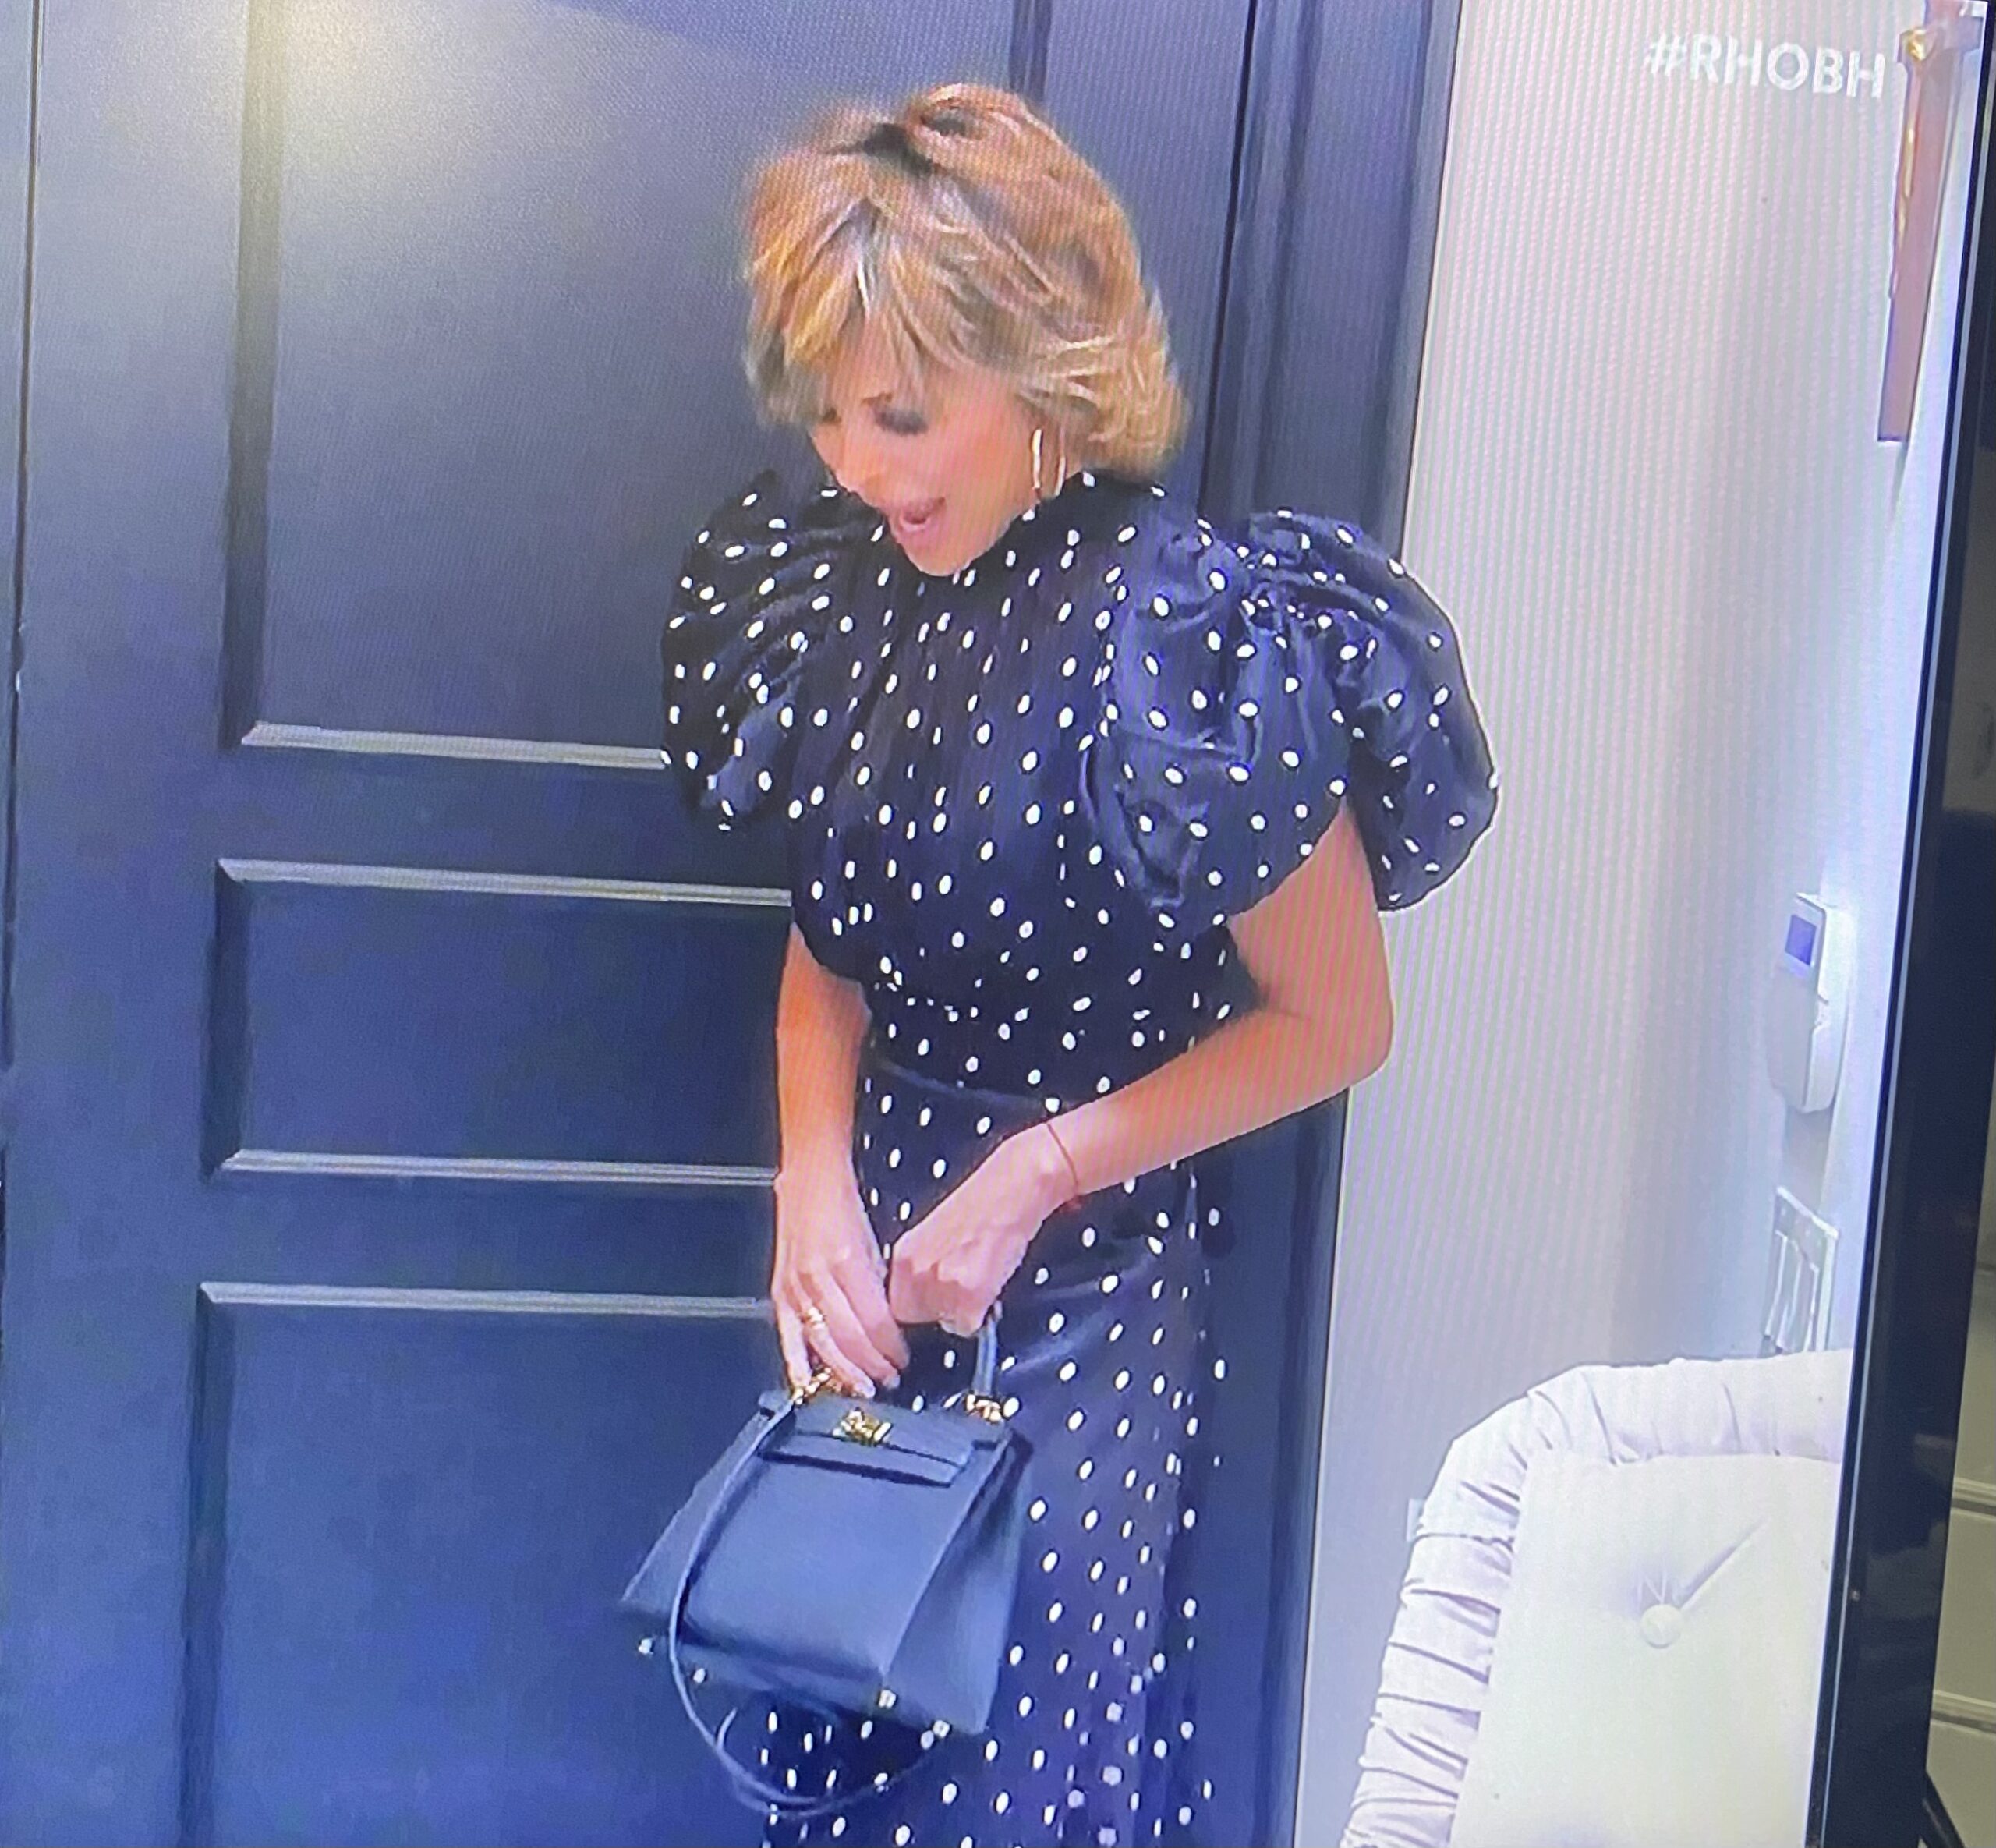 Kyle Richards has a 'Real Housewife' Hermès Birkin bag